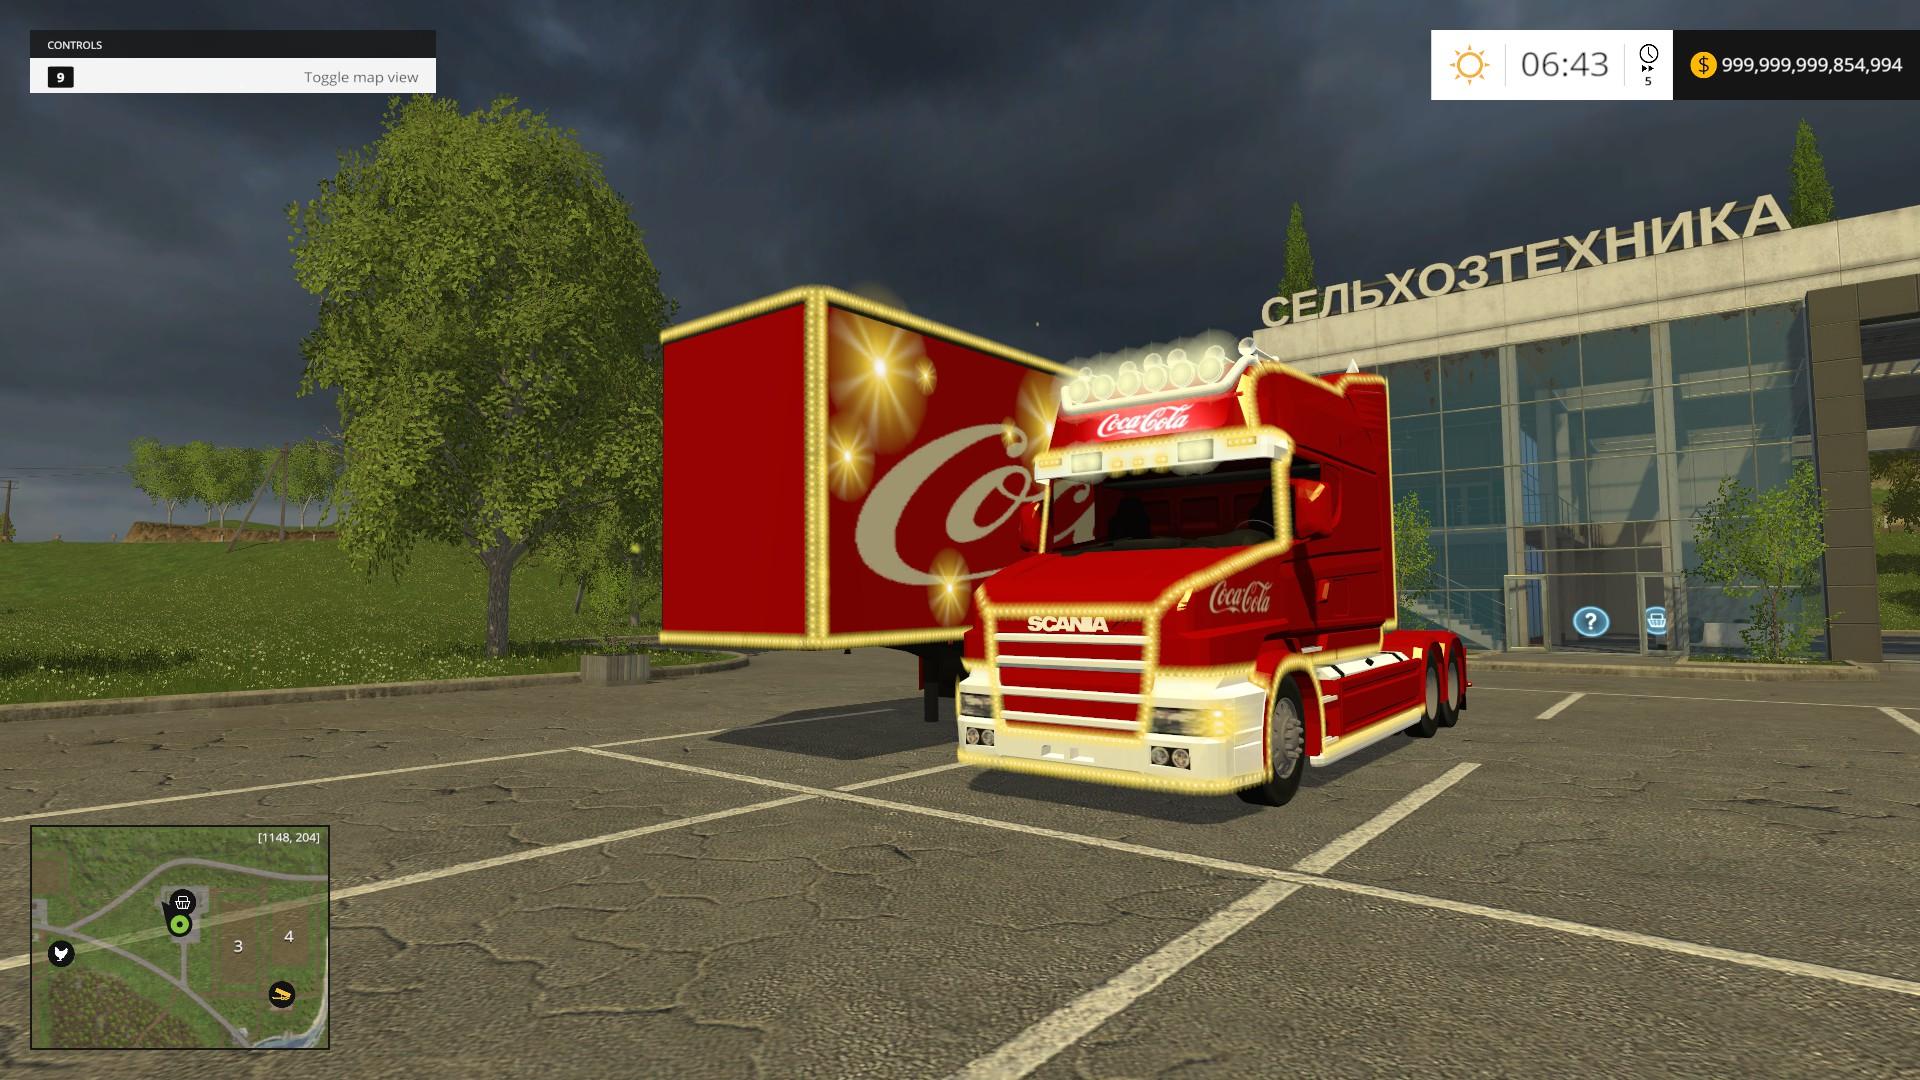 coca cola truck and trailers